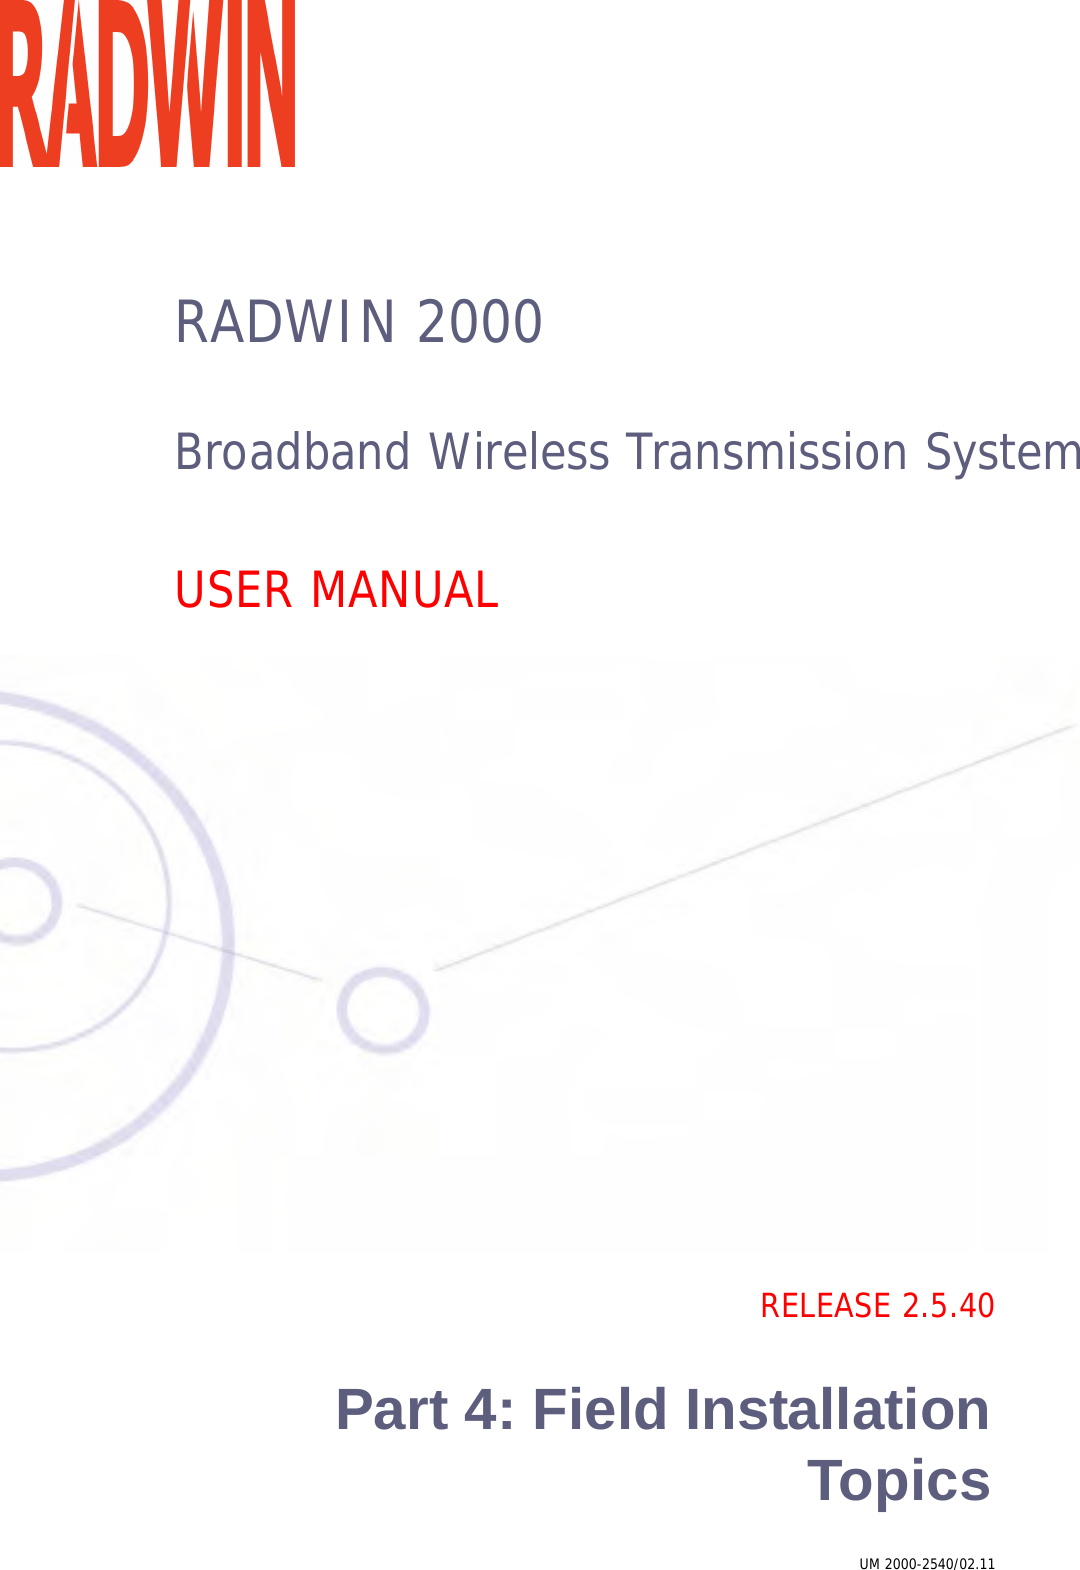 RADWIN 2000Broadband Wireless Transmission SystemUSER MANUALRELEASE 2.5.40Part 4: Field InstallationTopicsUM 2000-2540/02.11